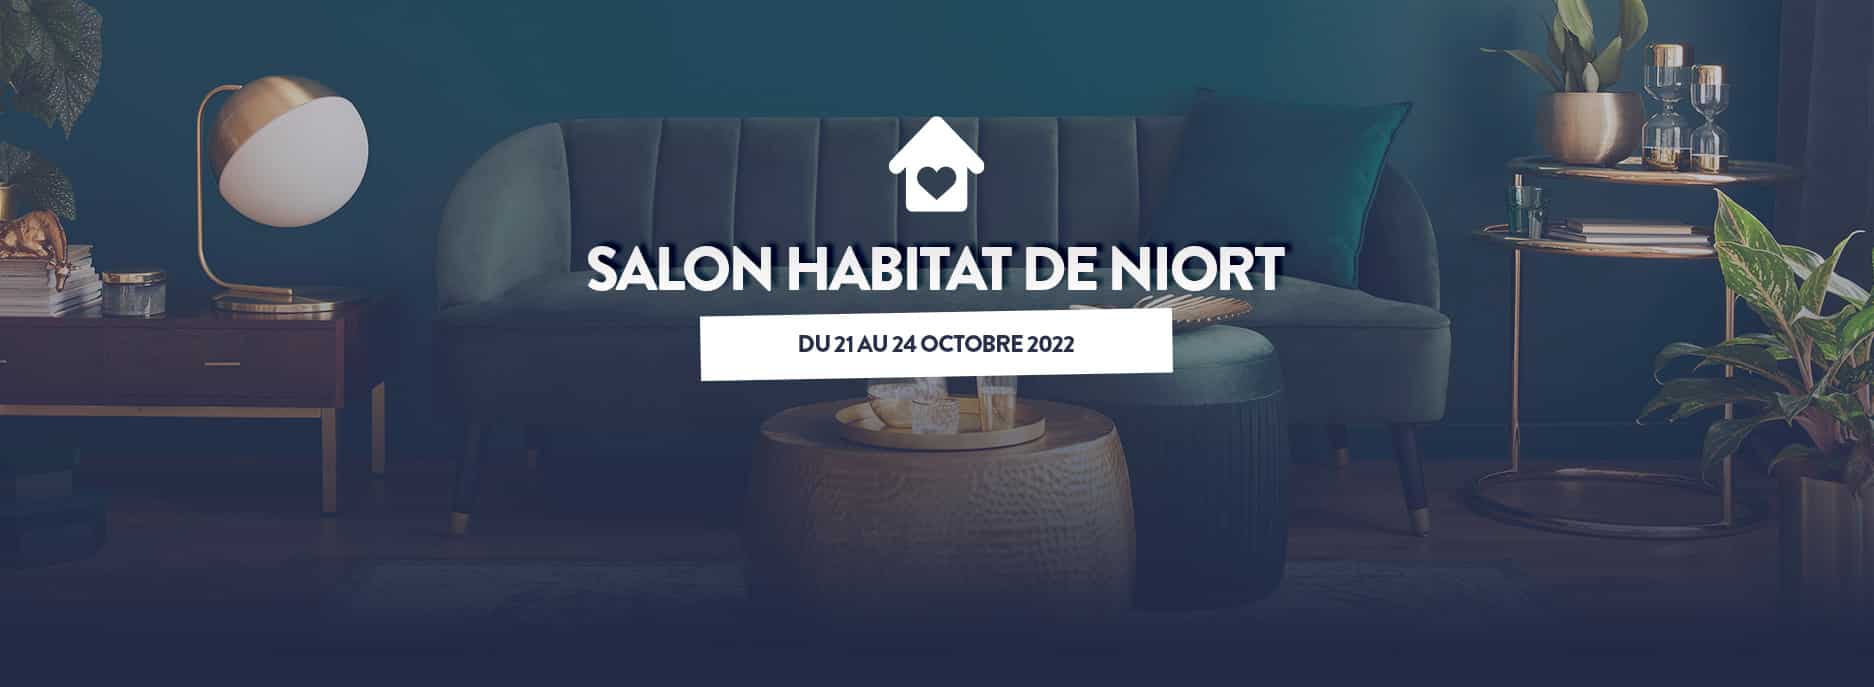 Salon Habitat de Niort du 21 au 24 octobre